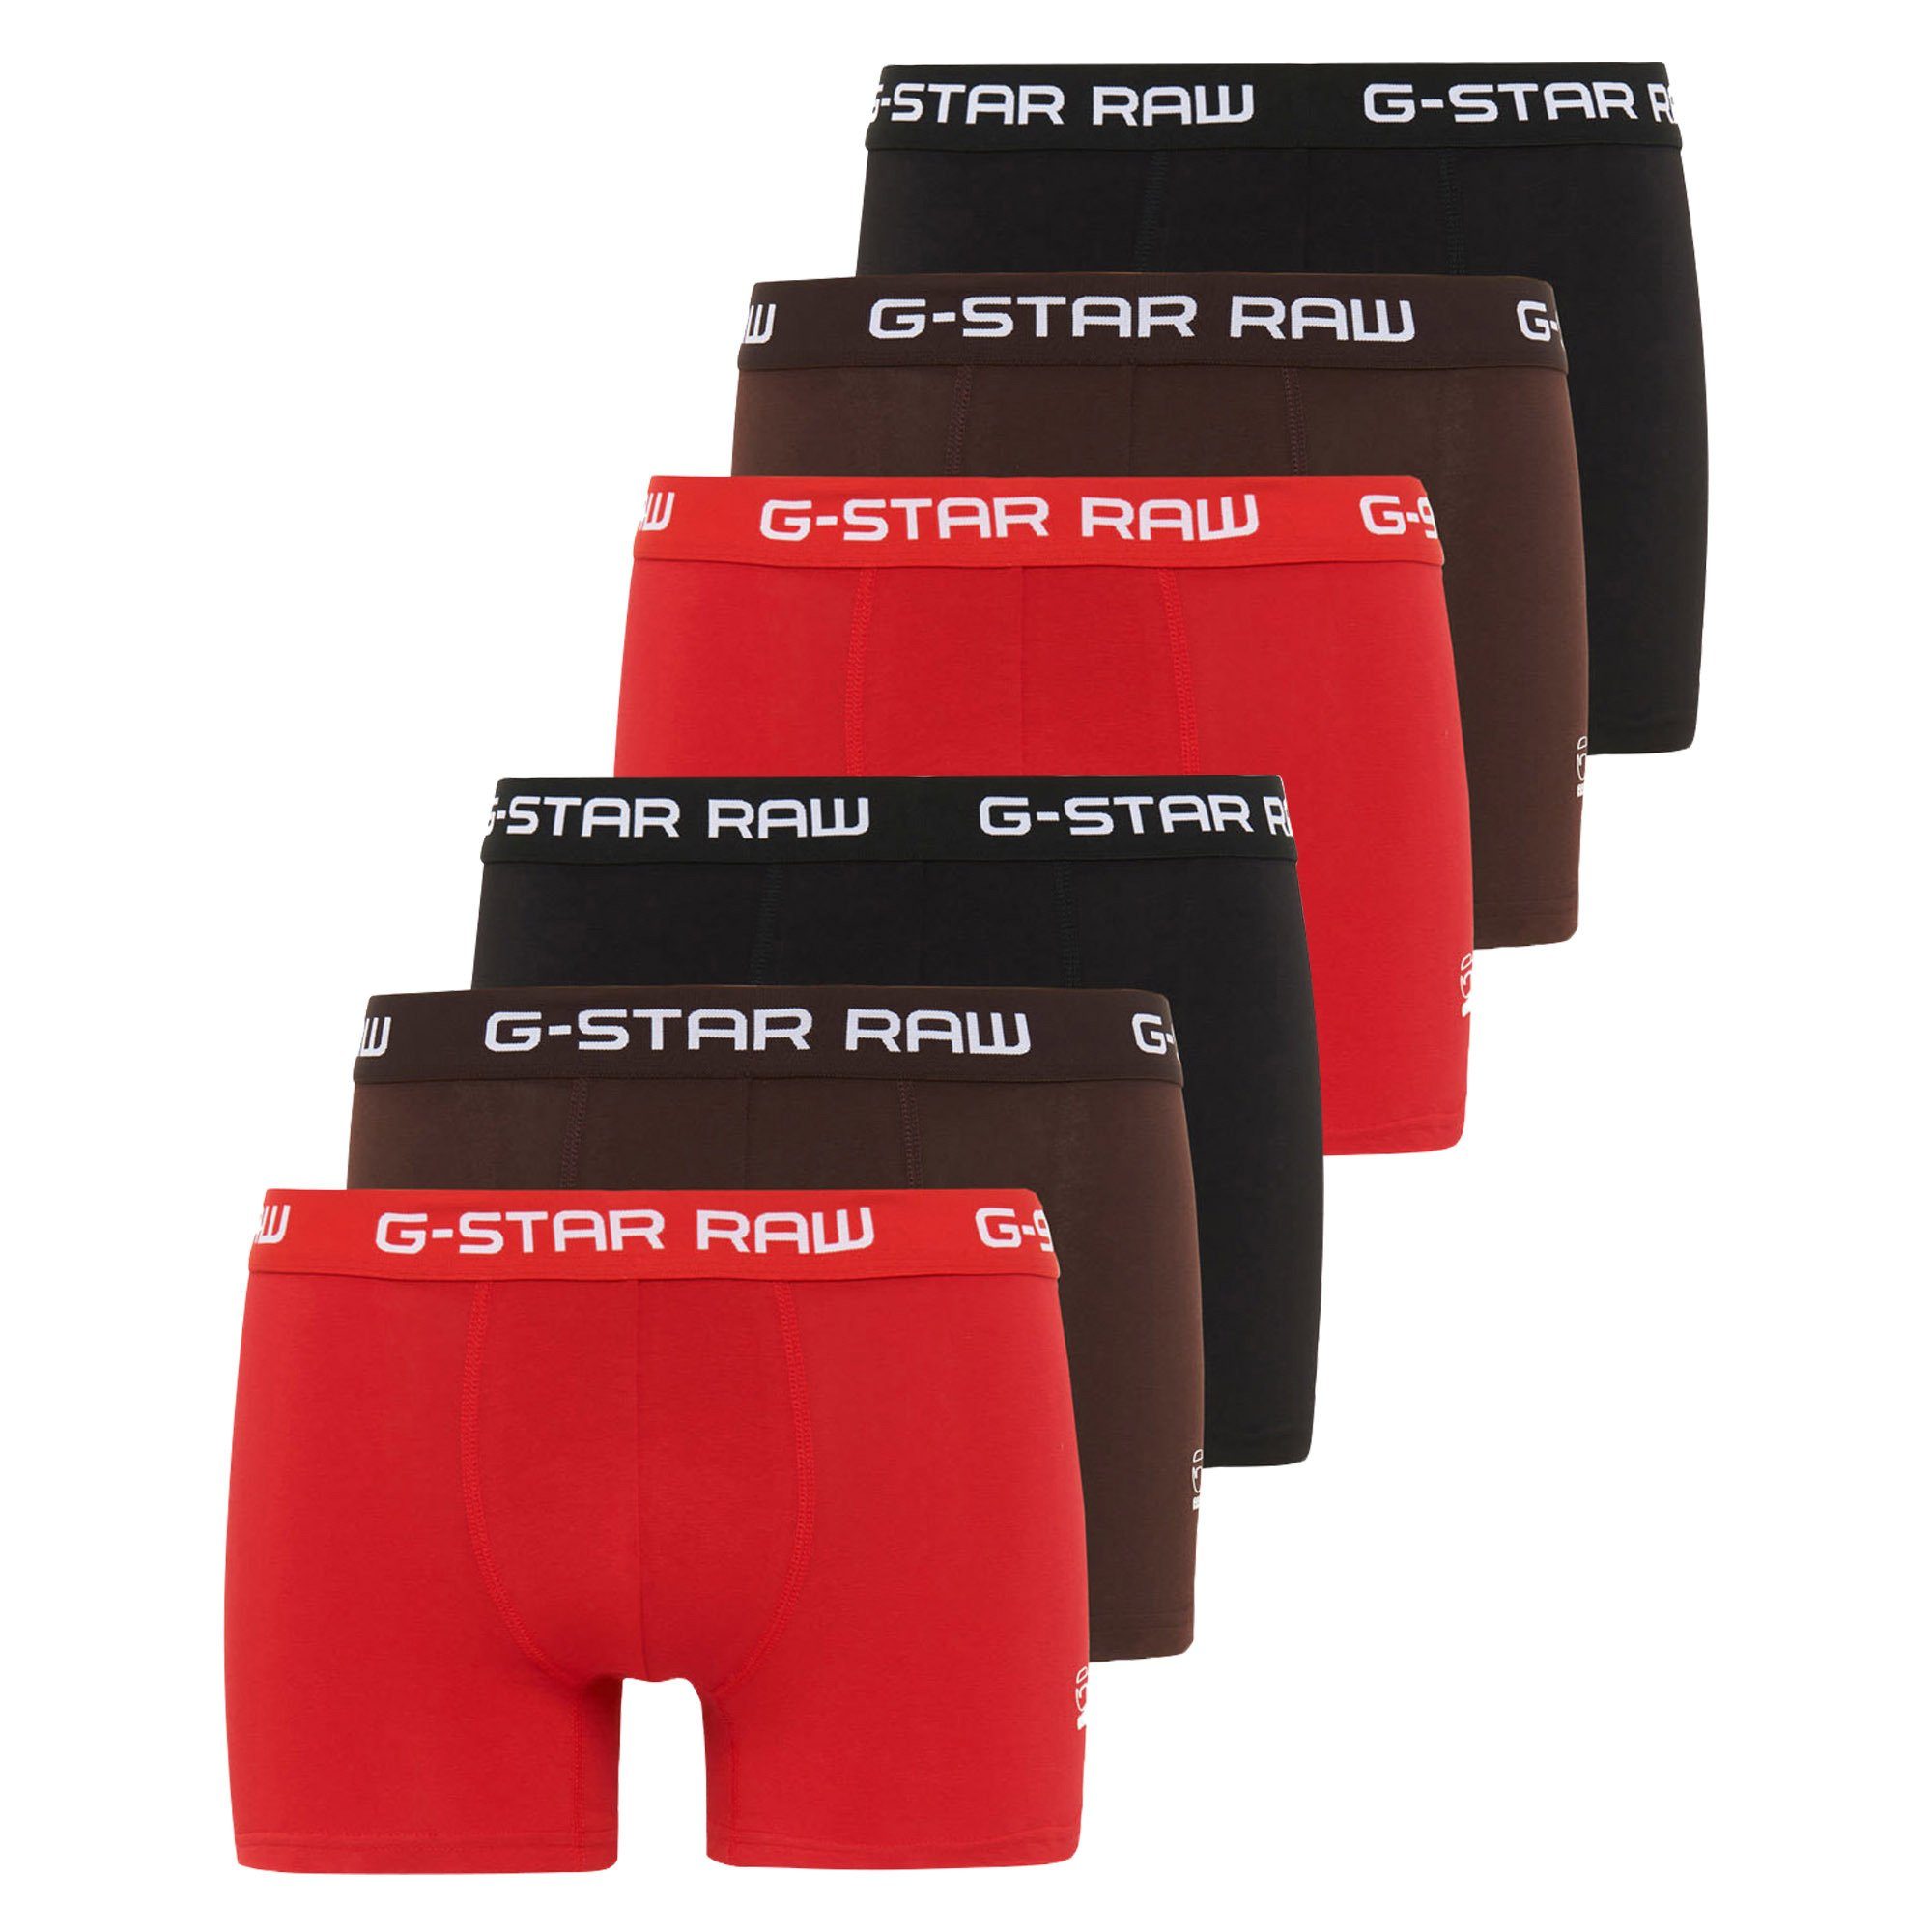 G-Star RAW Boxer Herren Shorts 6er Pack - Classic Trunk, Logobund Rot/Schwarz